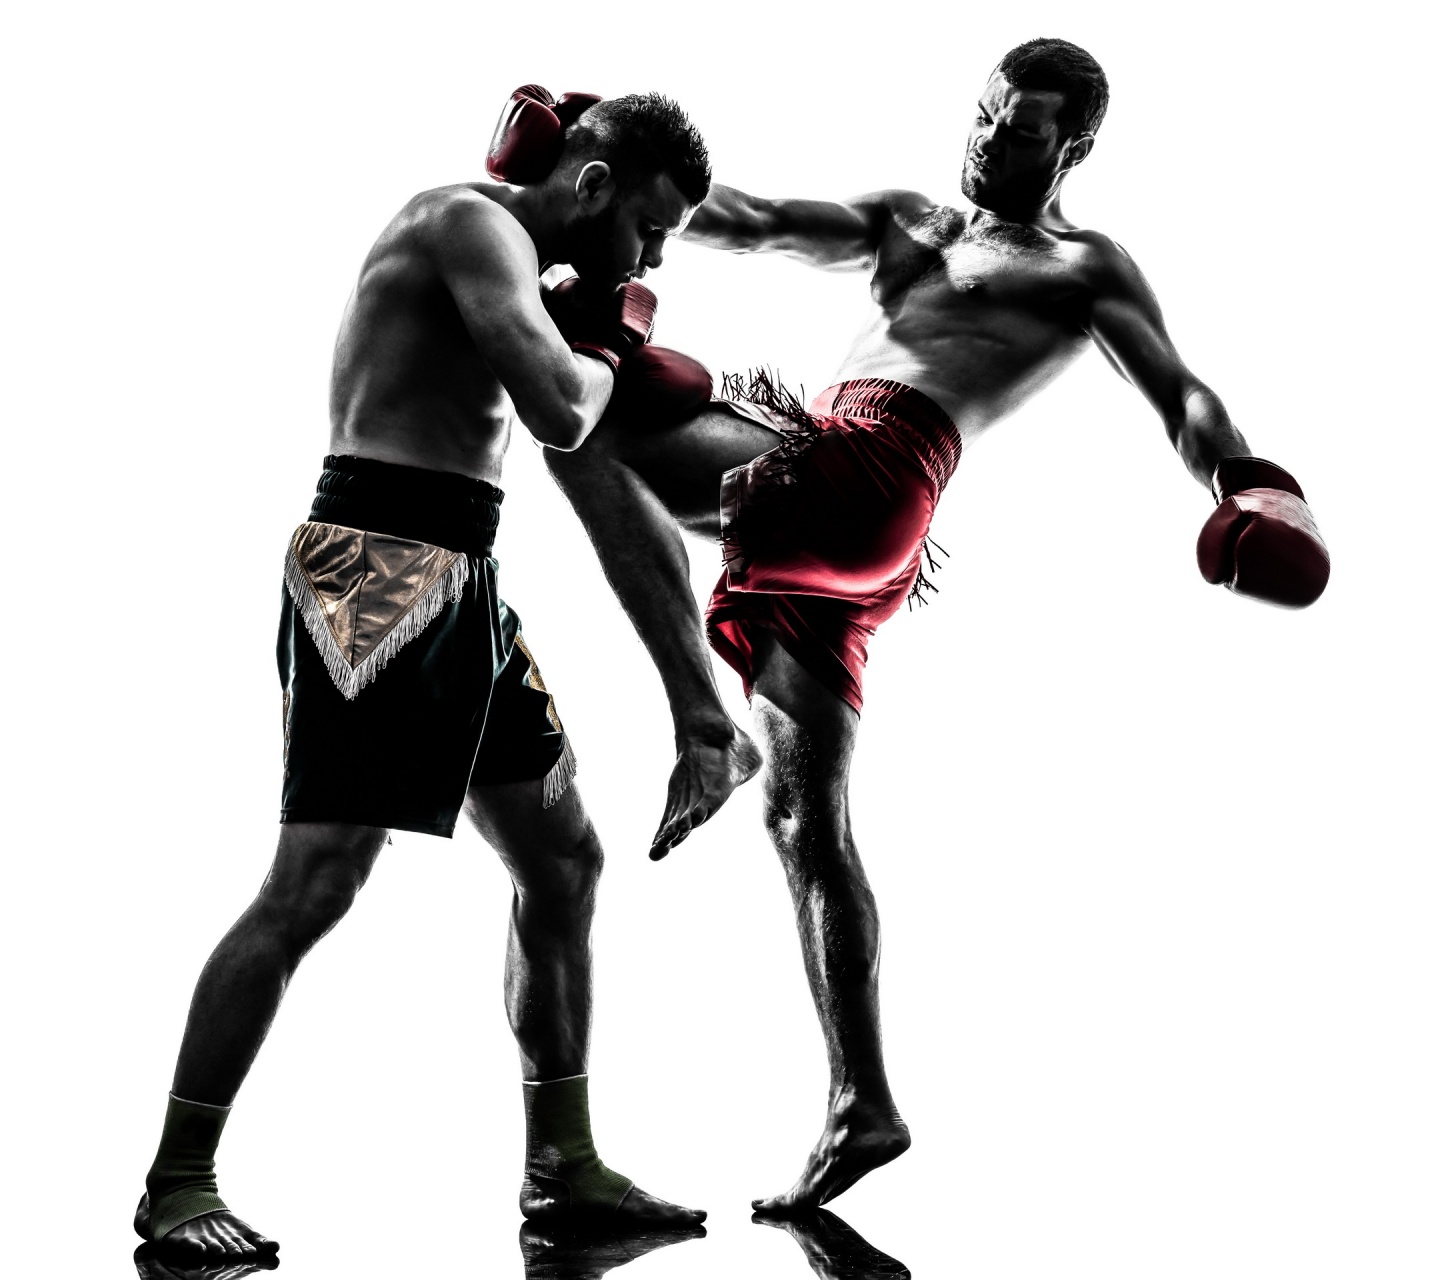 kickboxing wallpaper hd,kickboxing,muay thai,boxing,striking combat sports,kick